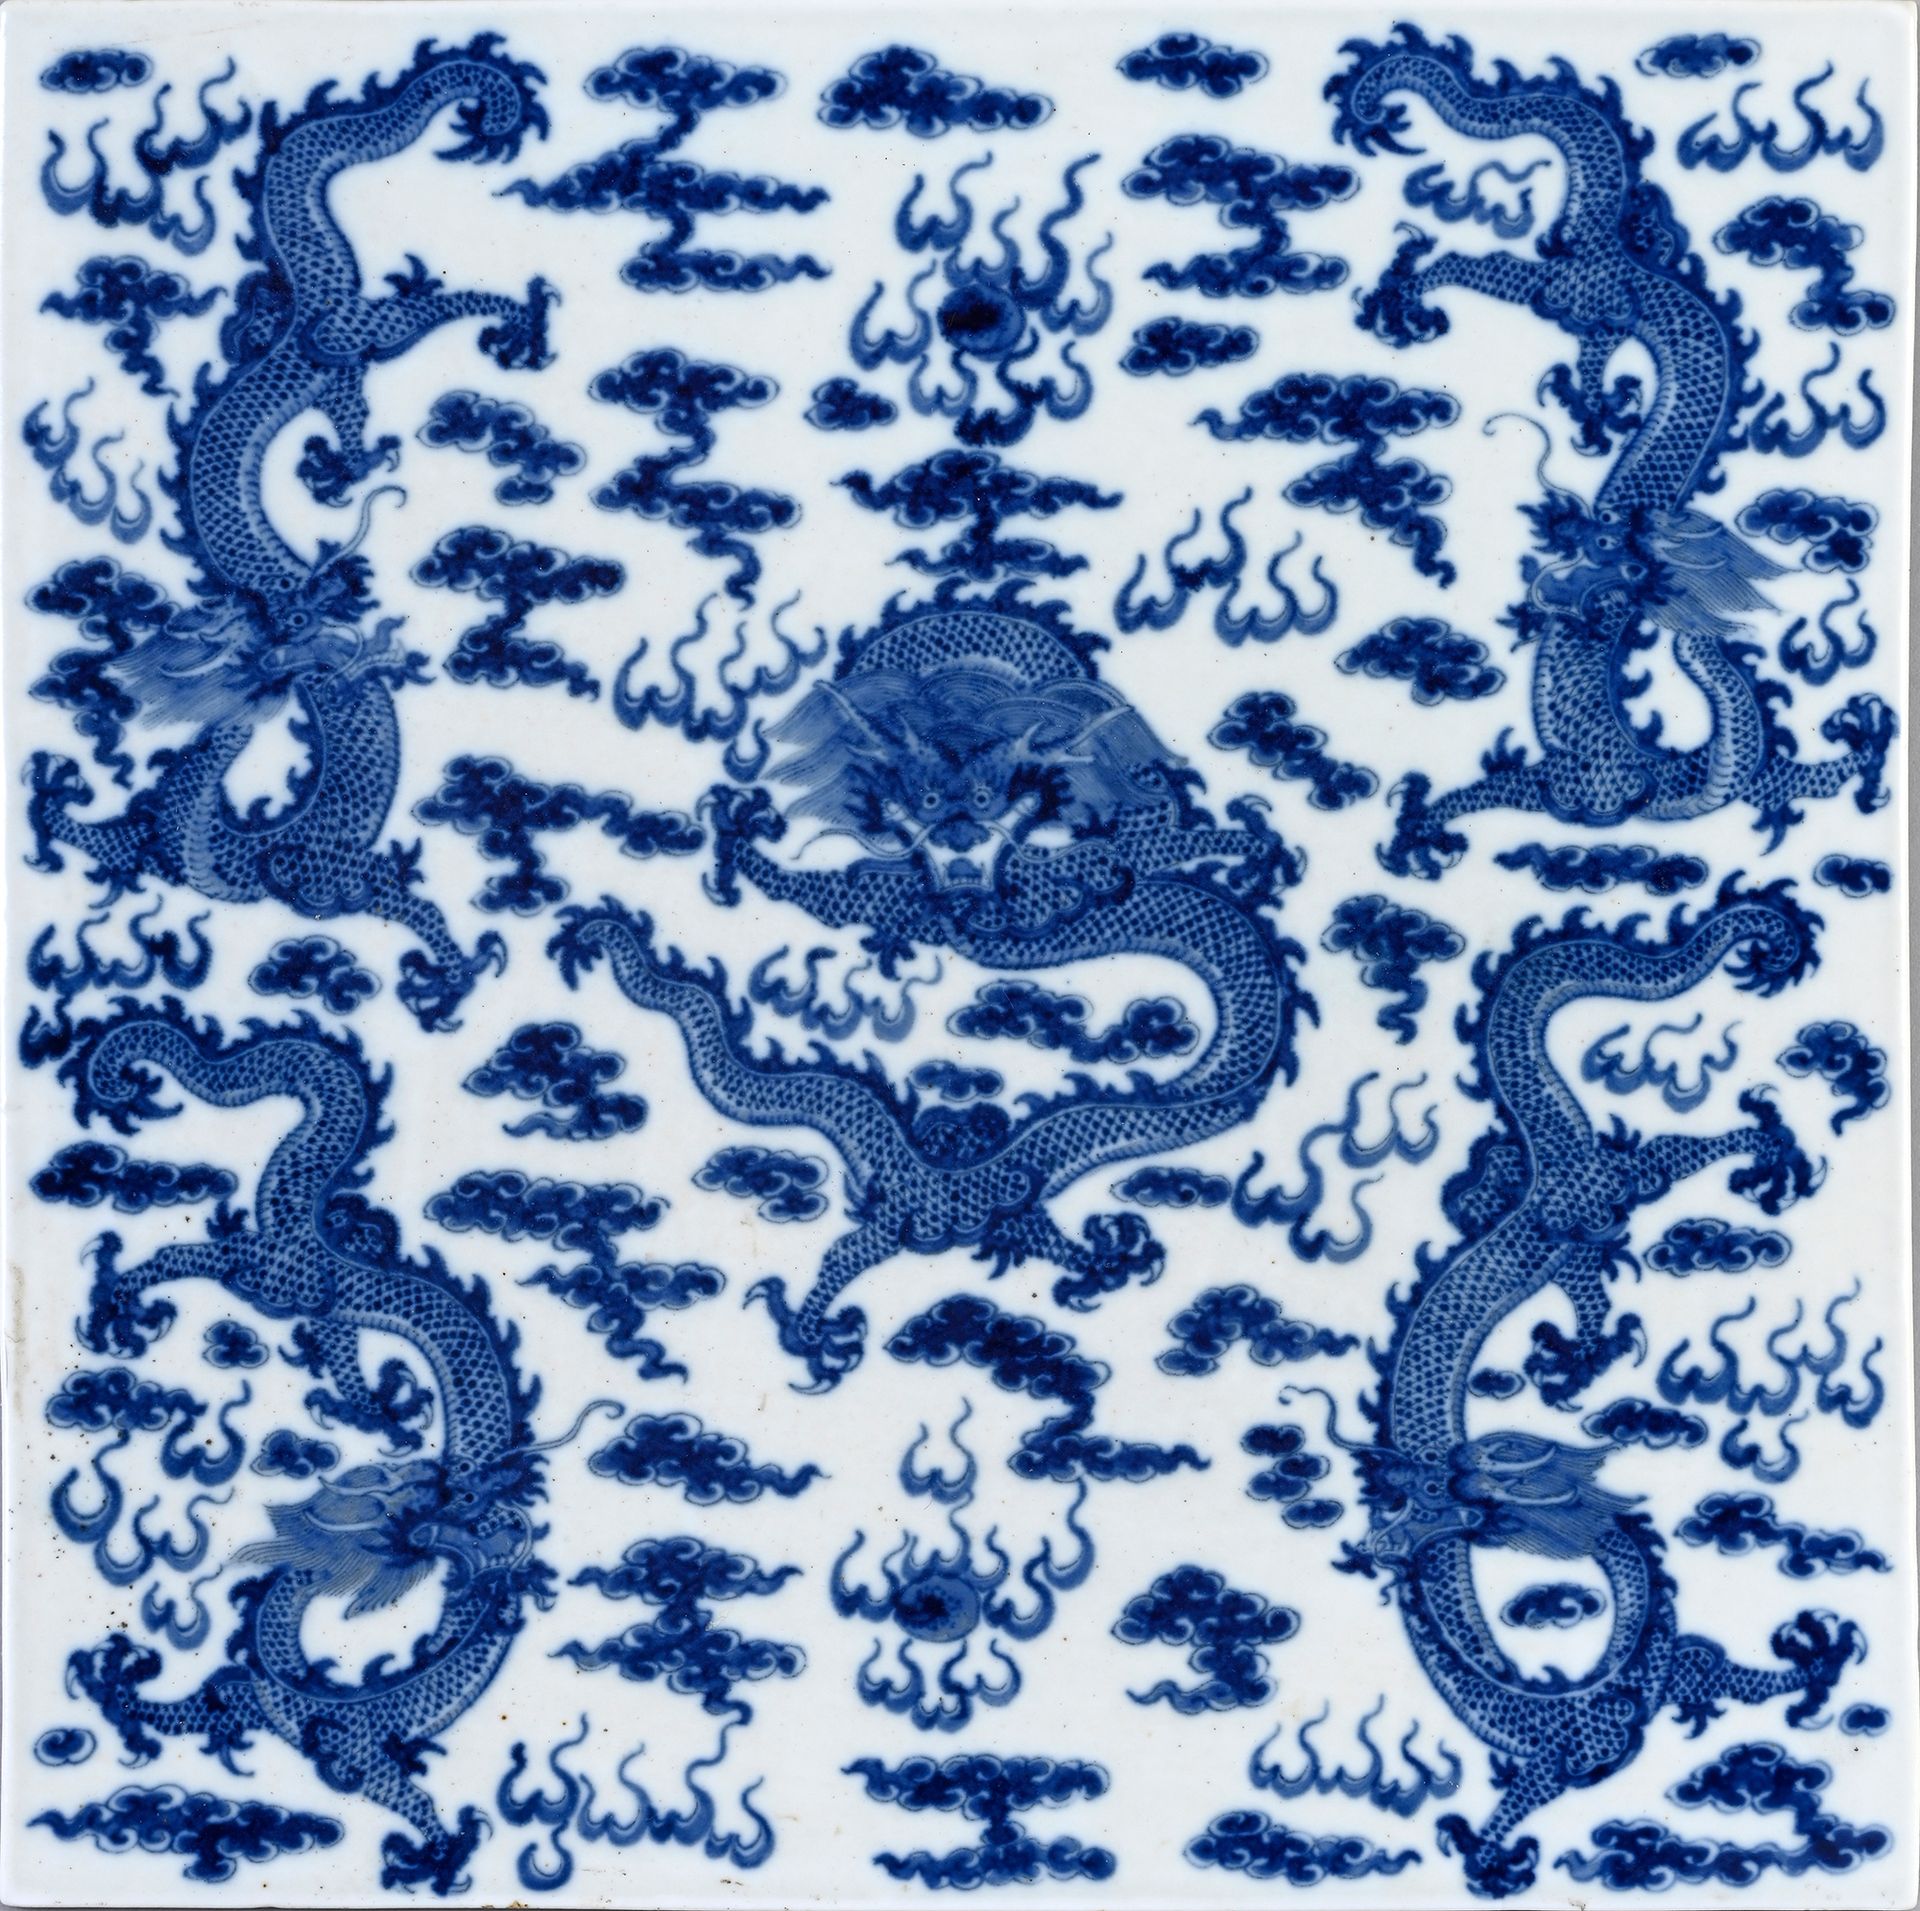 CHINE, XIXe siècle* 瓷板一对
方形，白底钴蓝装饰，五条四爪龙，身体蜿蜒，正面和侧面描绘了在云间追逐圣珠的情景。
32 x 32厘米